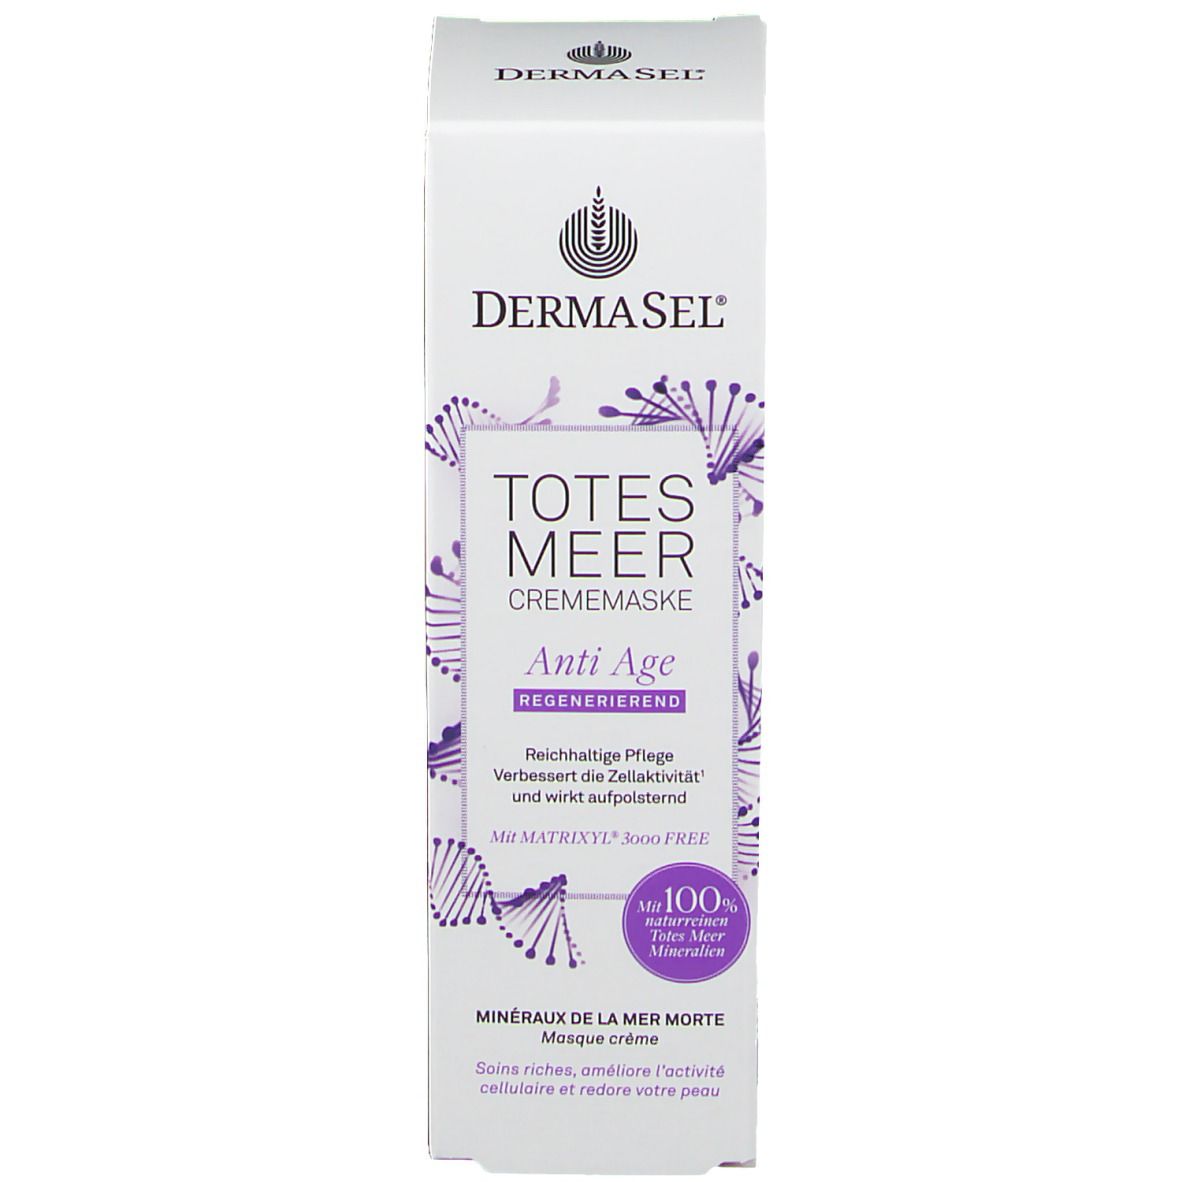 DermaSel® Minéraux de la Mer Morte - Masque Crème Anti-Age